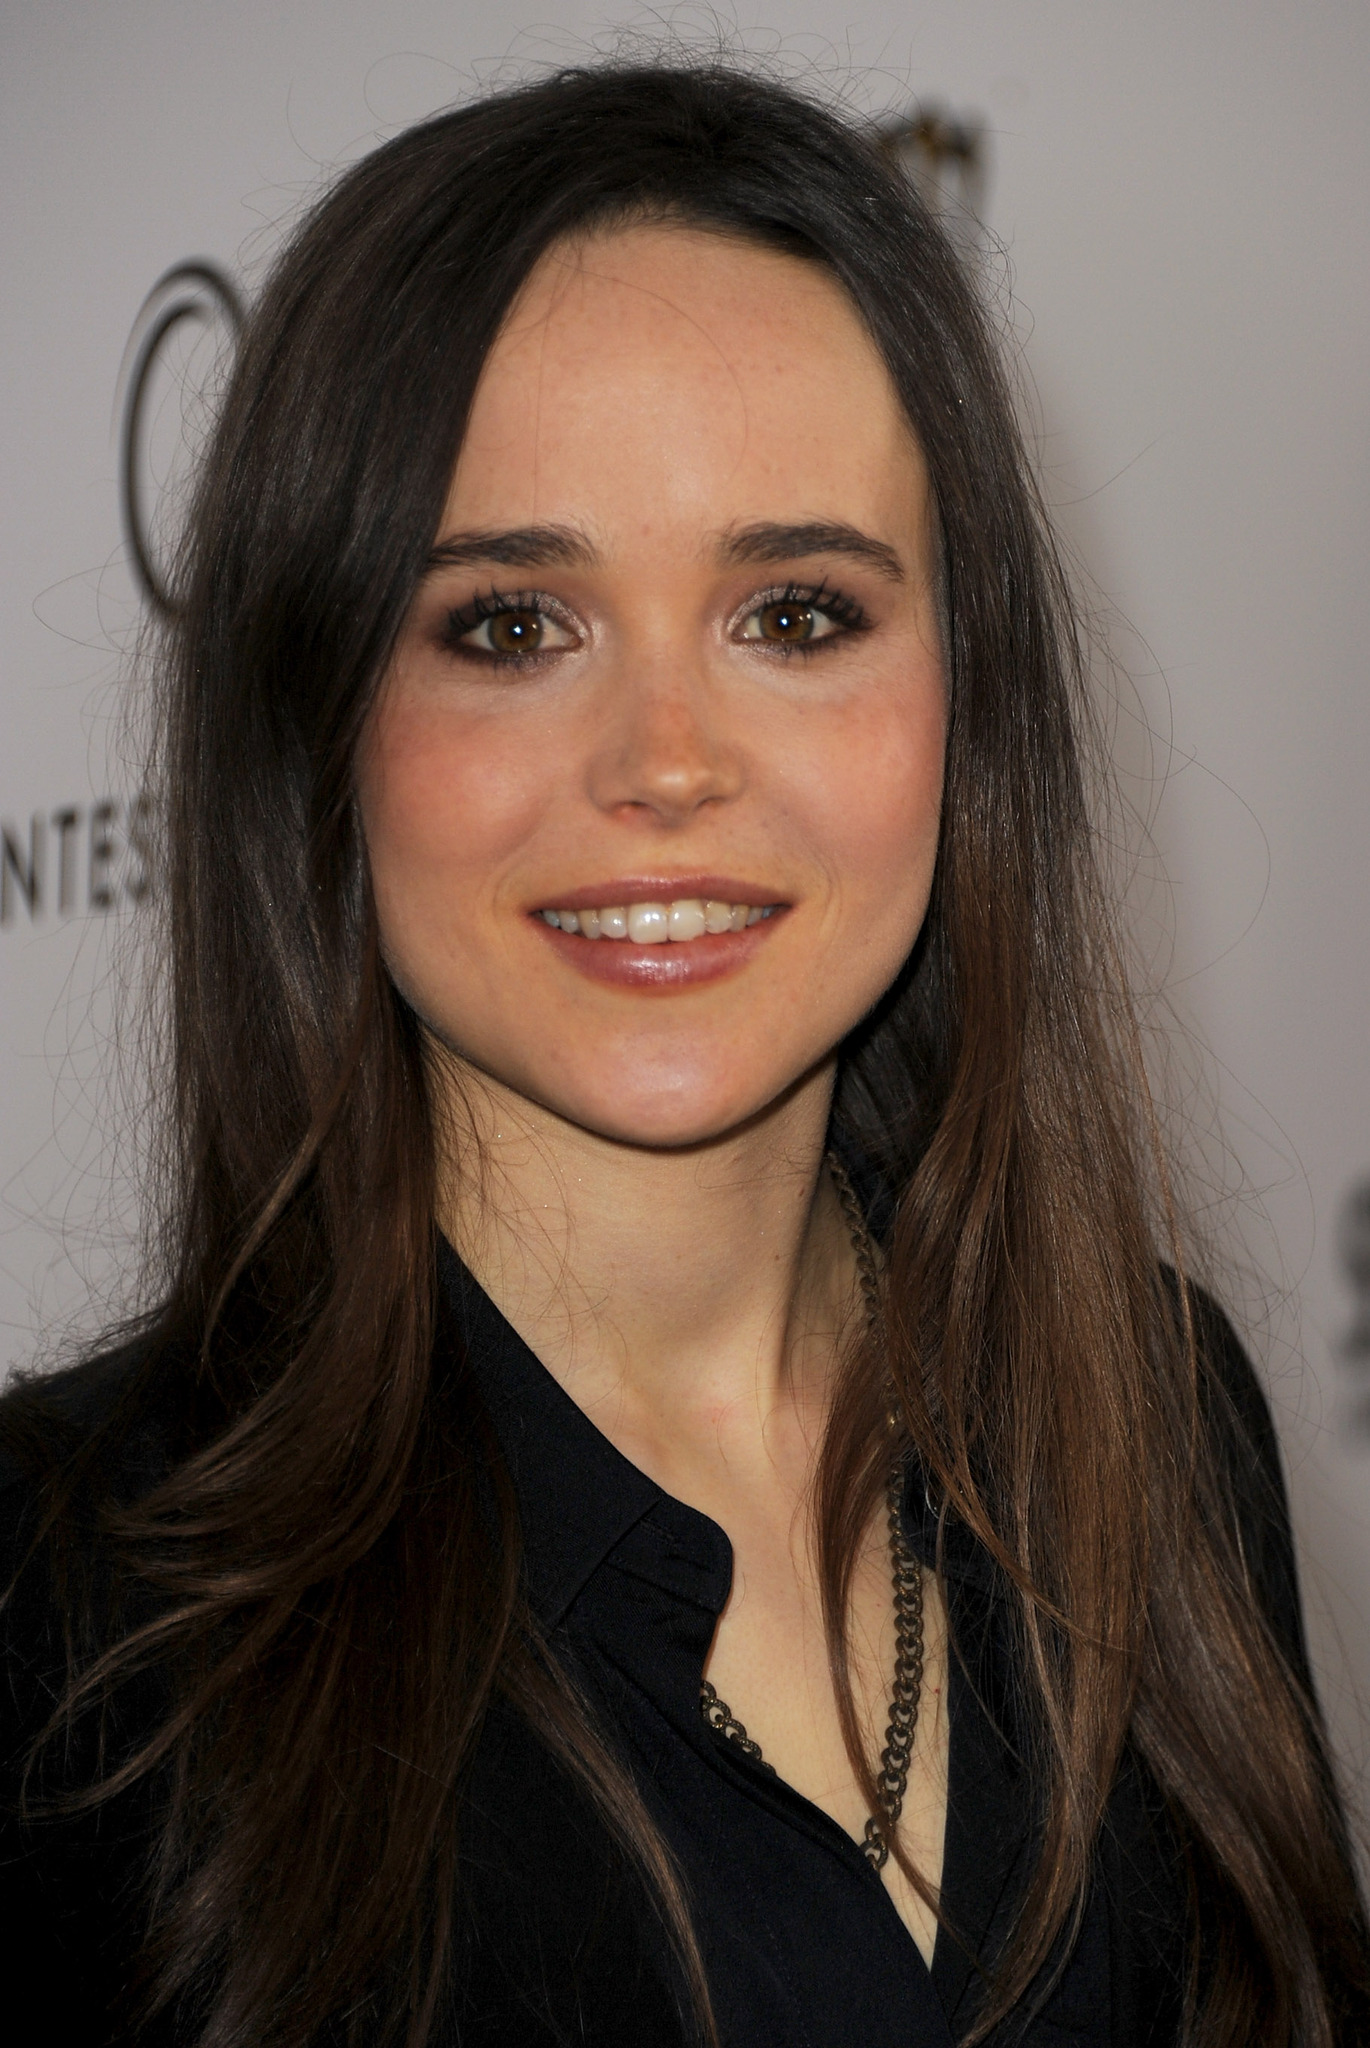 Ellen Page at event of Super (2010)